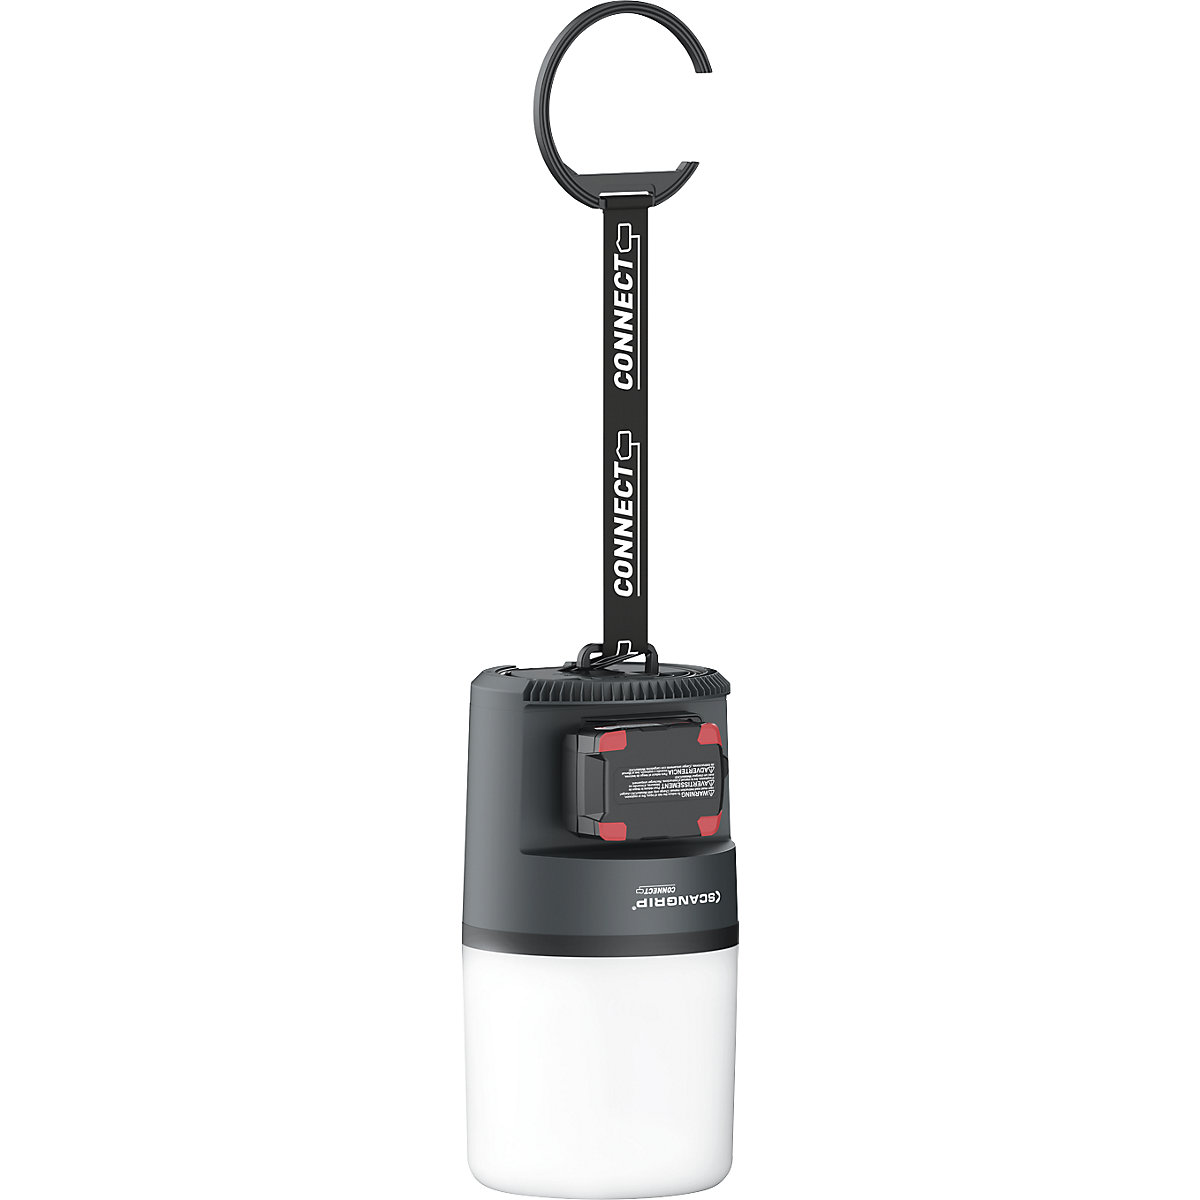 Lampa robocza LED AREA 6 CONNECT – SCANGRIP (Zdjęcie produktu 2)-1